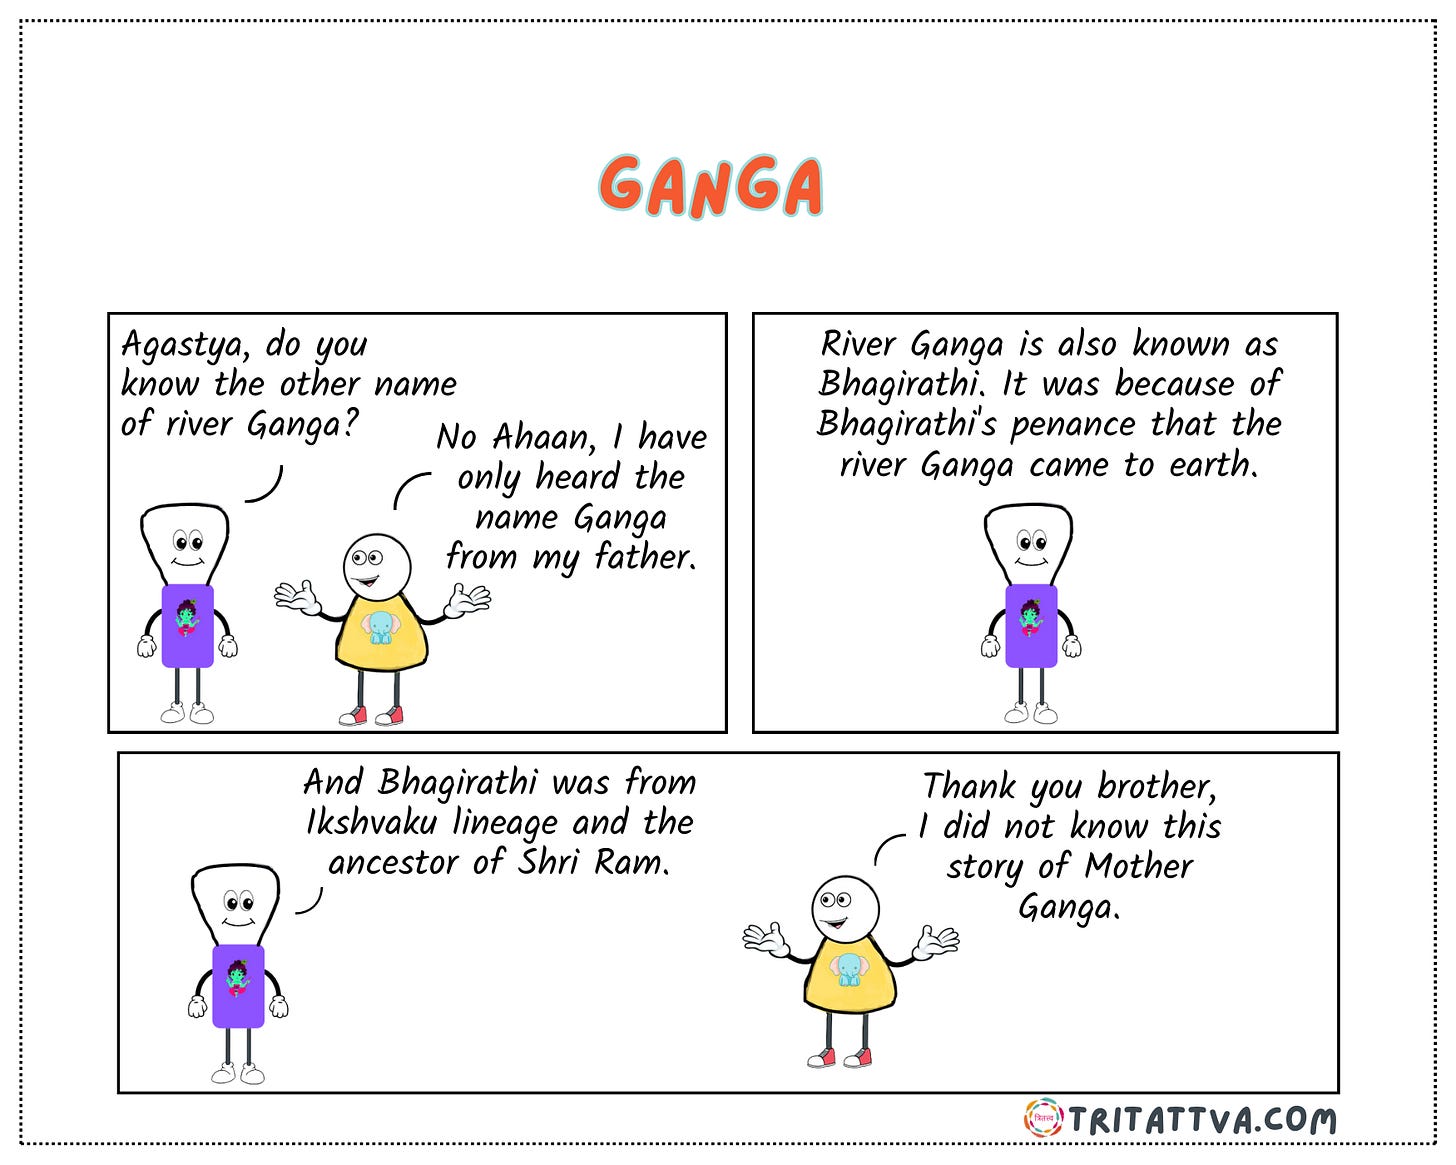 TriTattva's comic strip about the holy river Ganga.